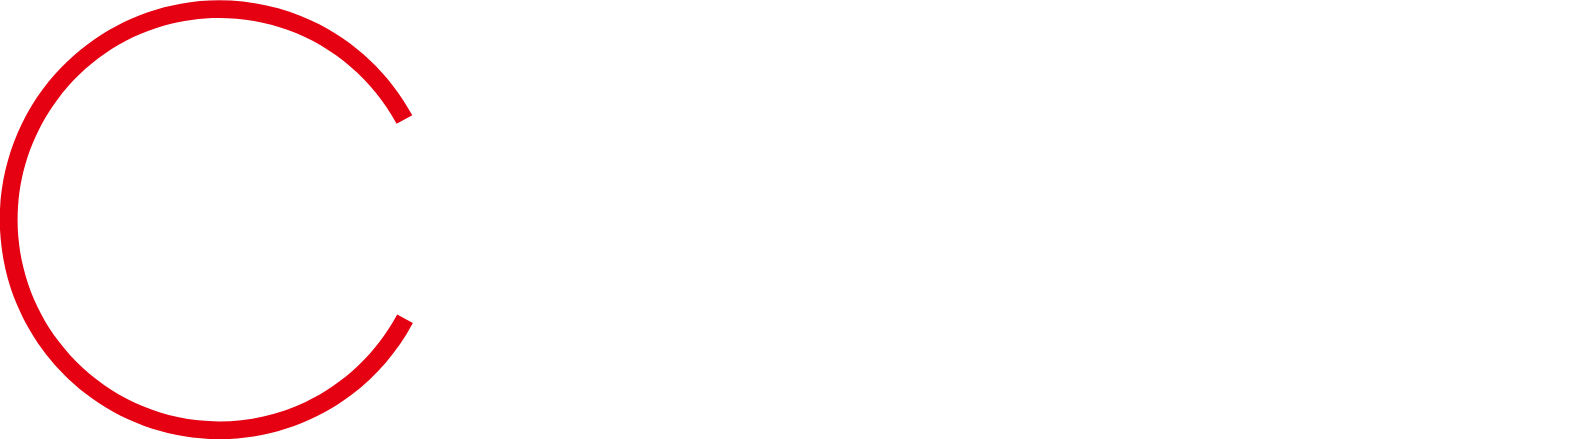 Full Truck Alliance logo grand pour les fonds sombres (PNG transparent)